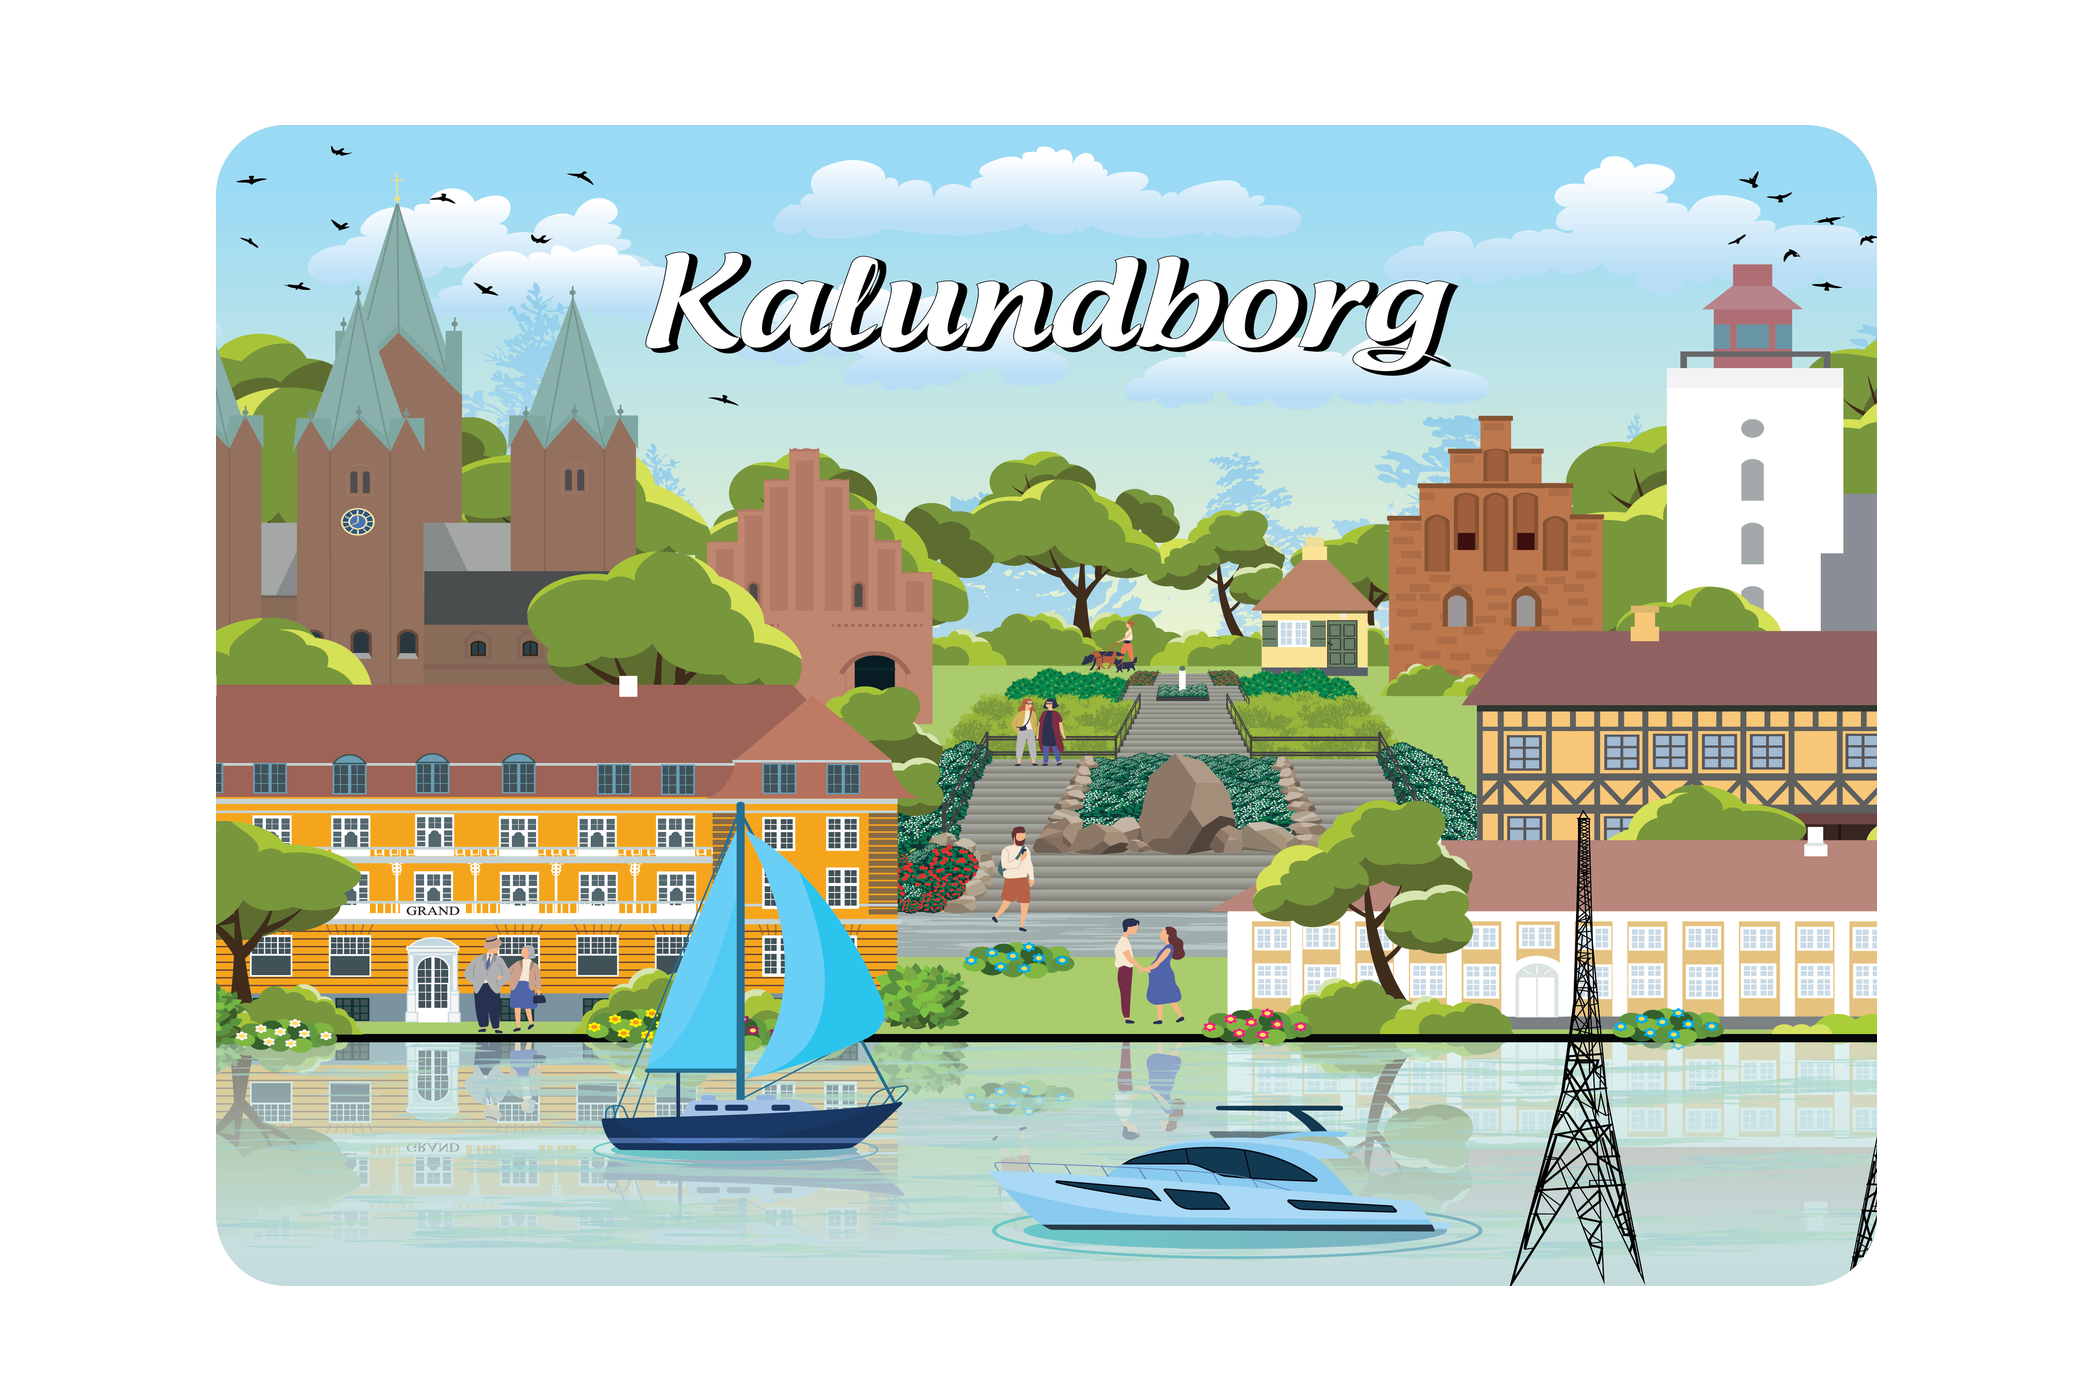 Kalundborg - Bykoncept